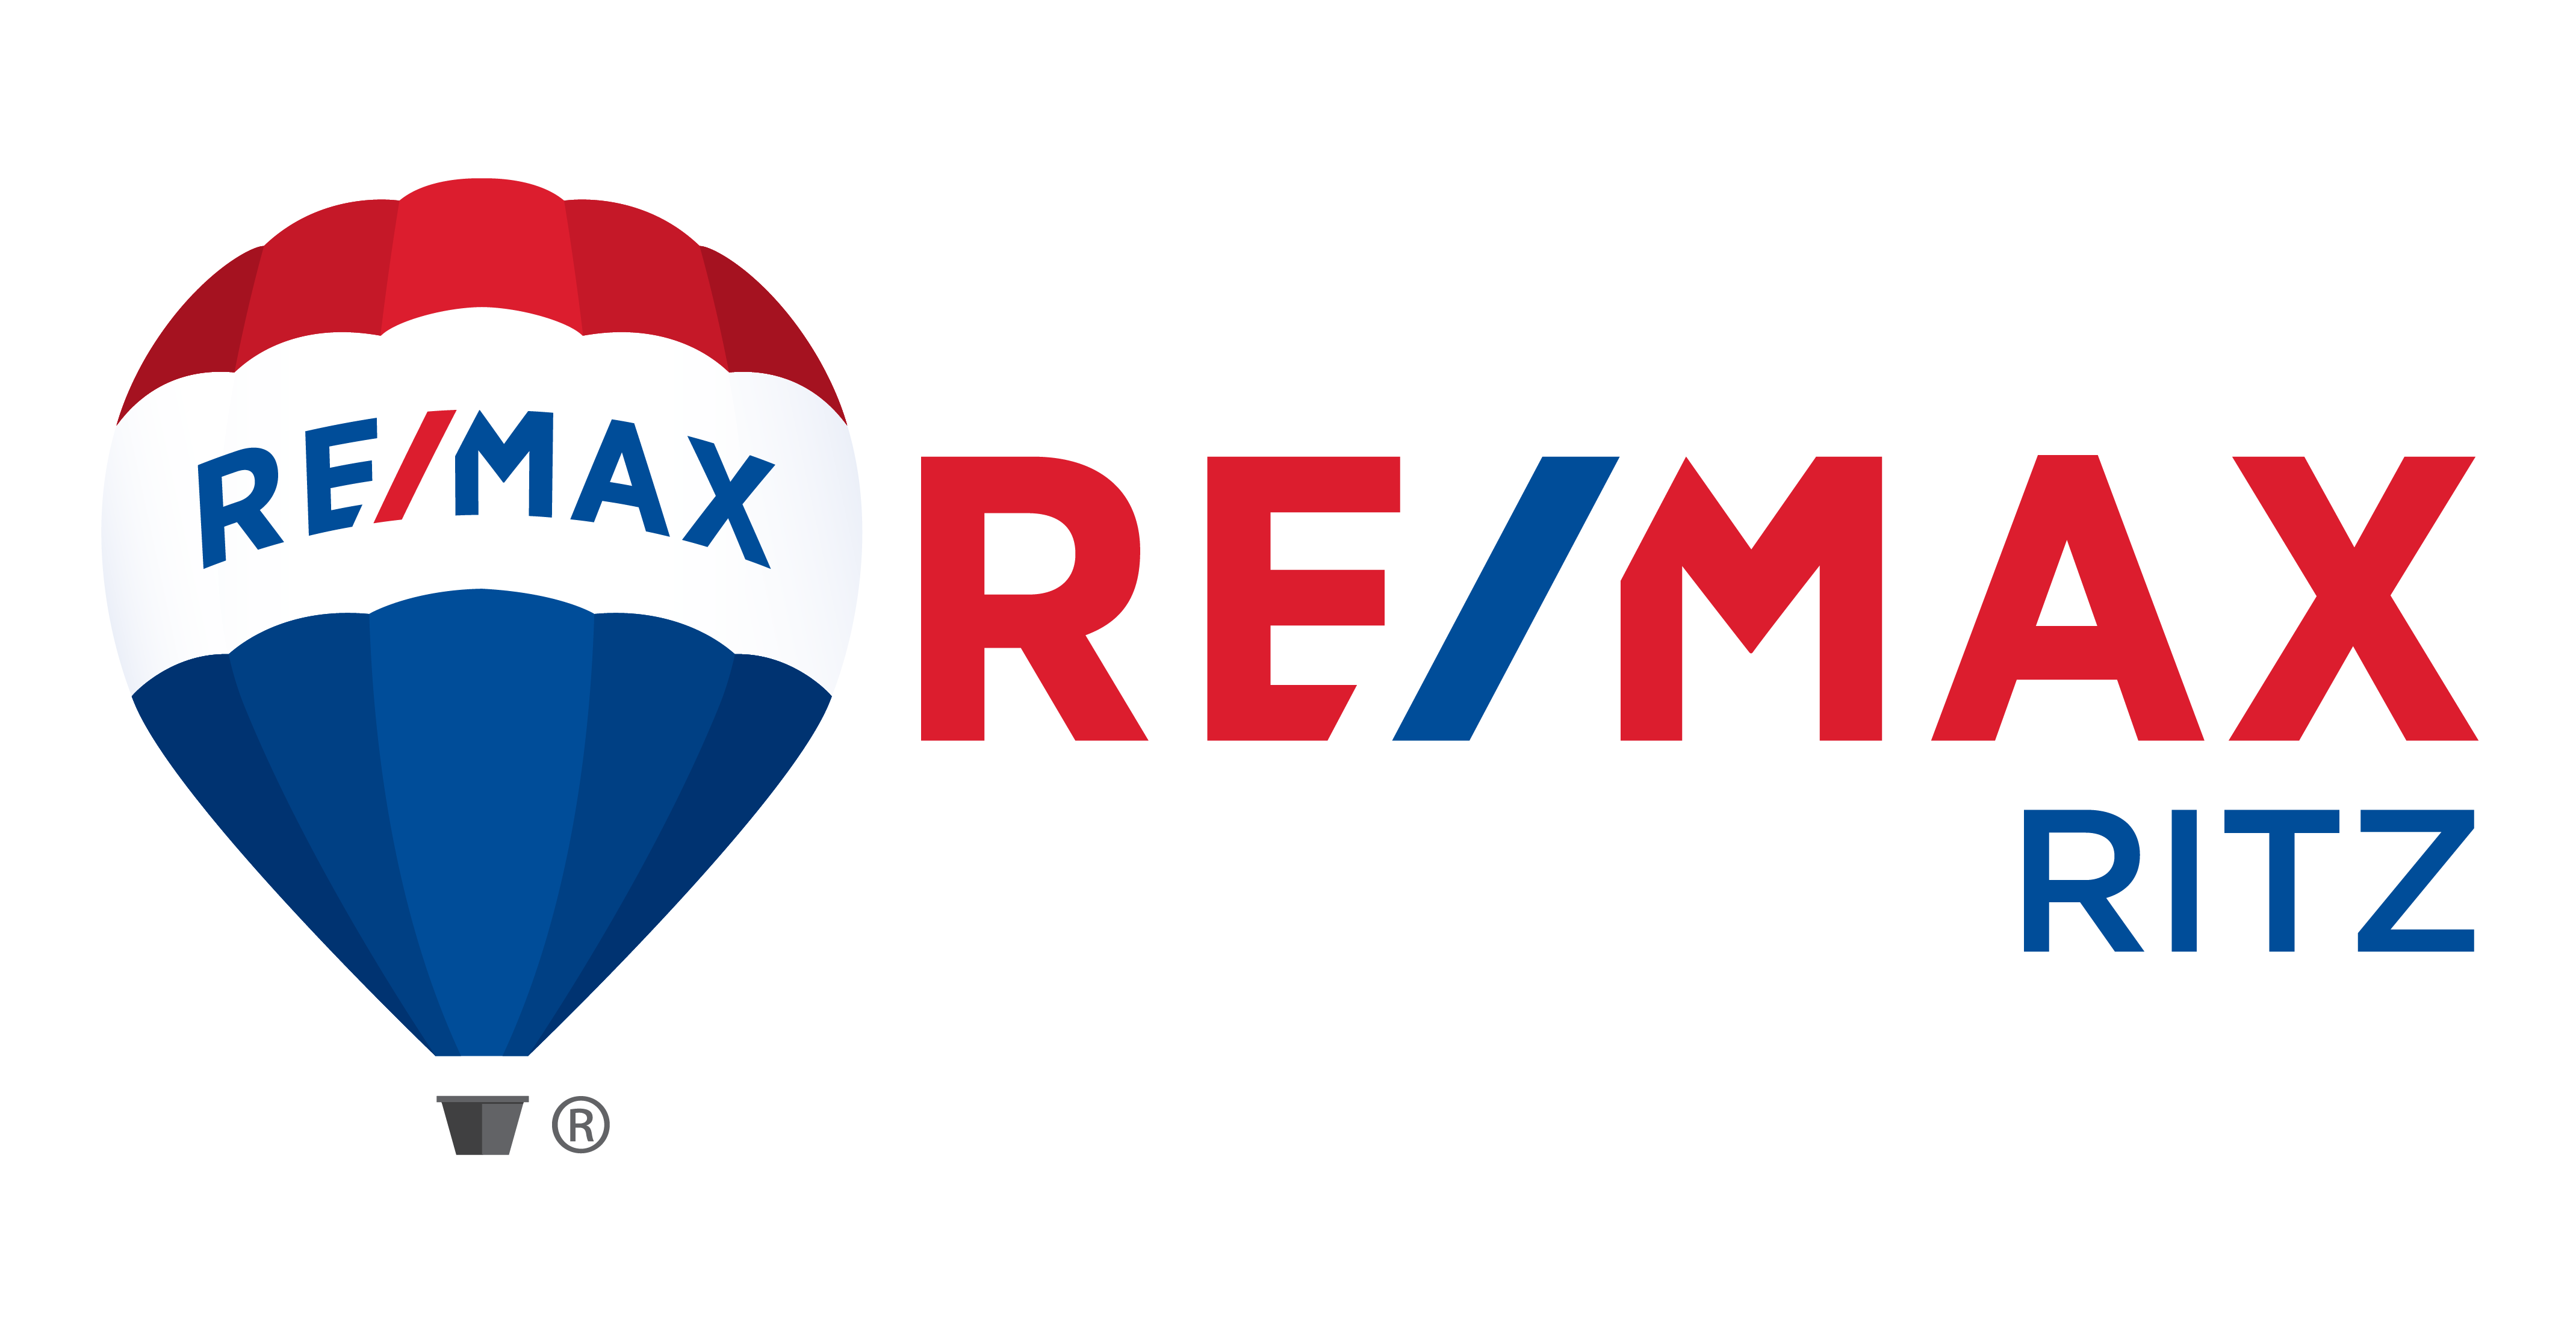 Remax Ritz